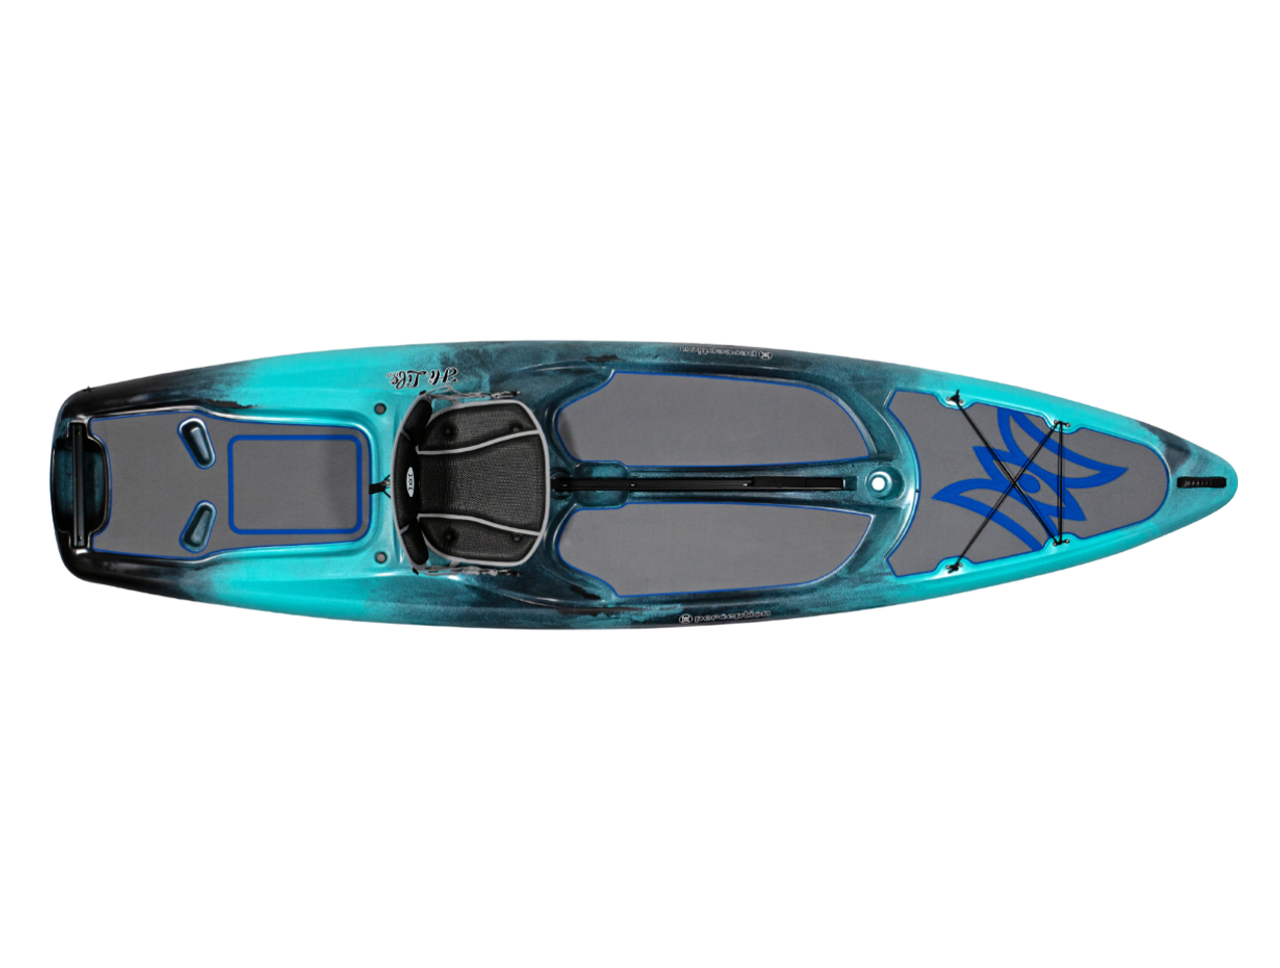 Perception Hi-Life Convertible SUP/Kayak Paddle - 3 Piece